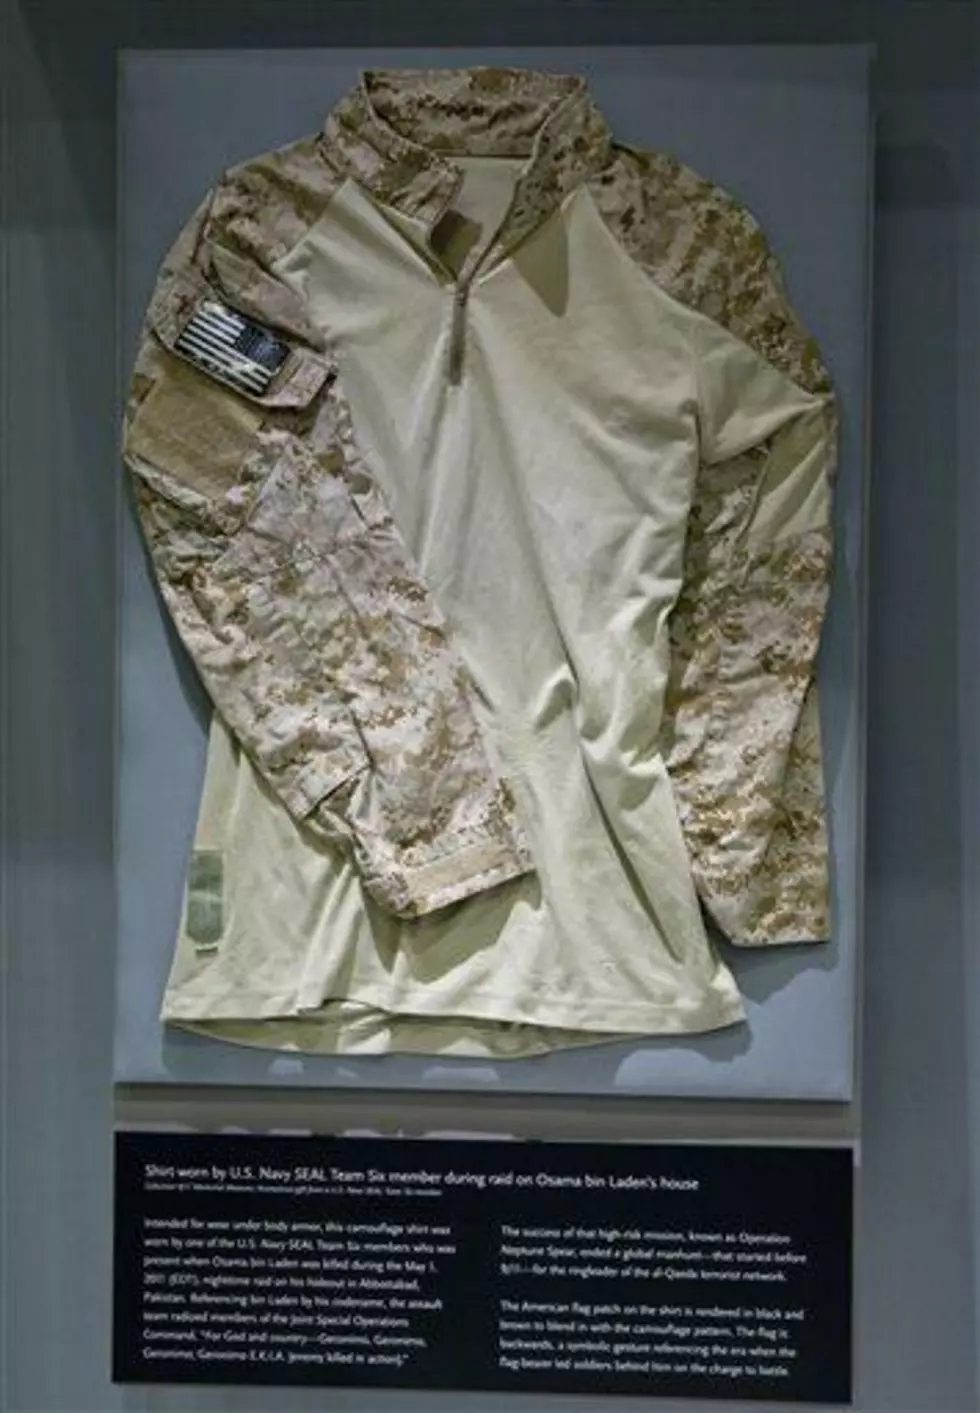 9/11 museum shows SEAL&#8217;s shirt from bin Laden raid